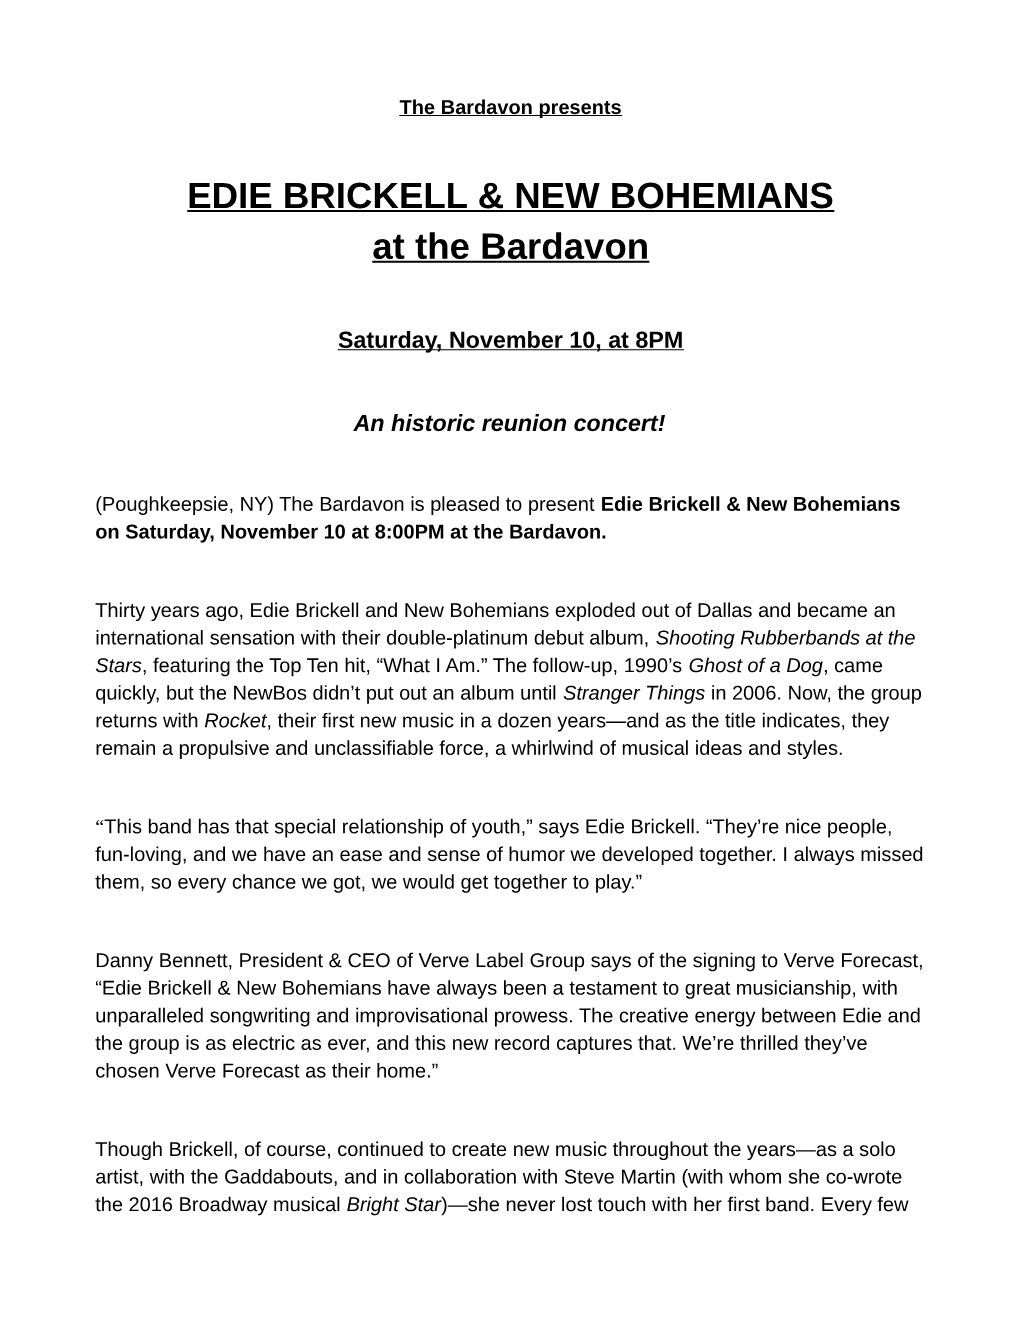 EDIE BRICKELL & NEW BOHEMIANS at the Bardavon